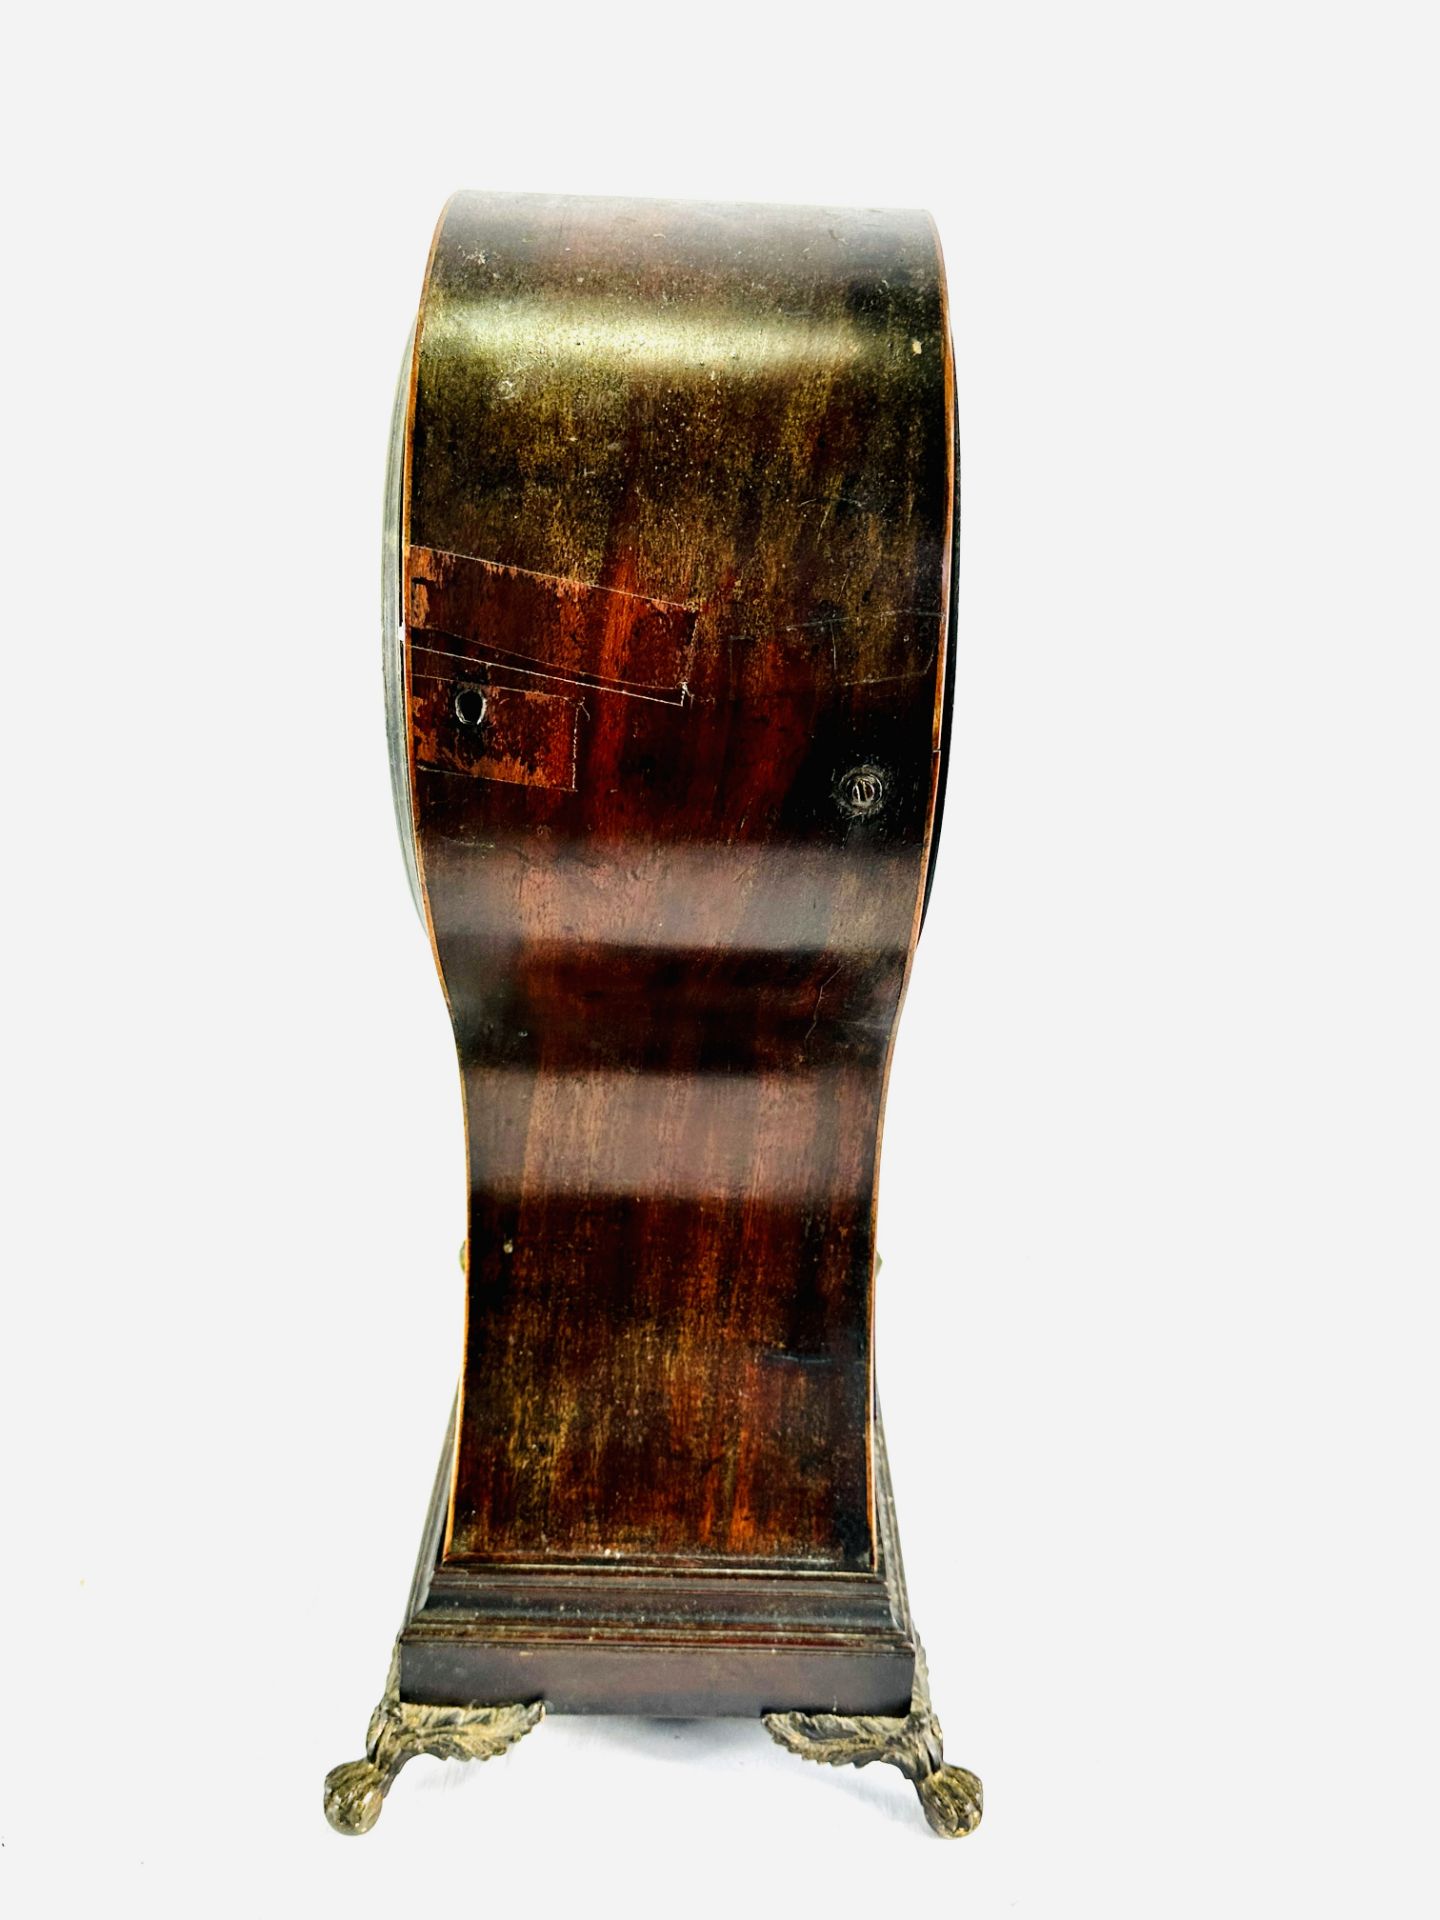 Mahogany cased mantle clock - Image 3 of 5